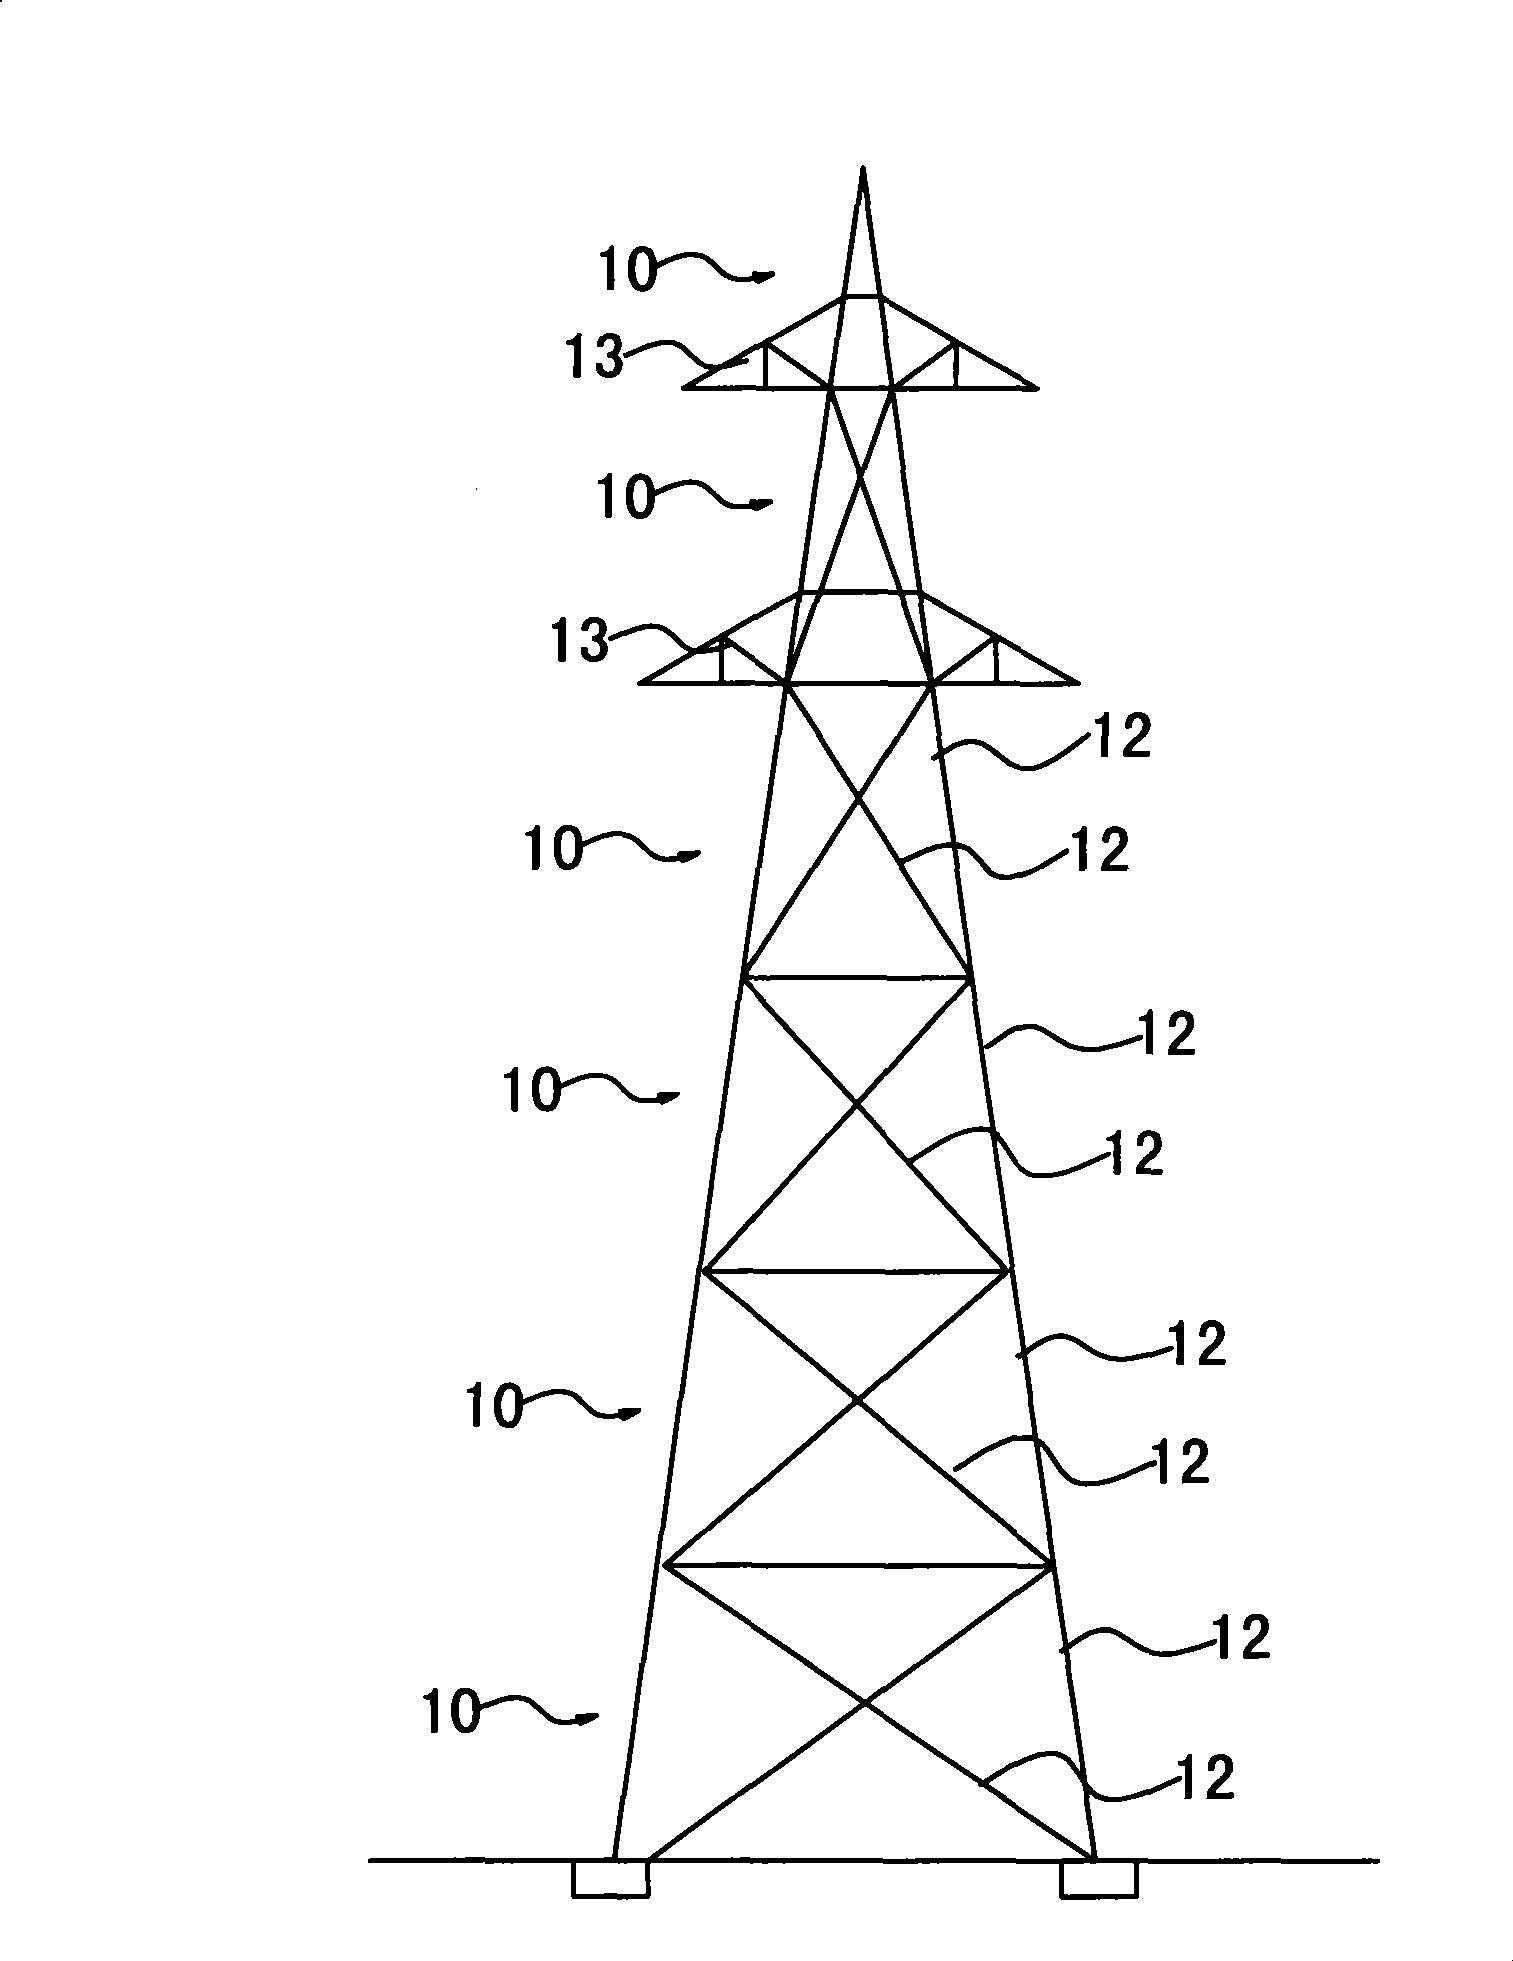 Installation method for pylon